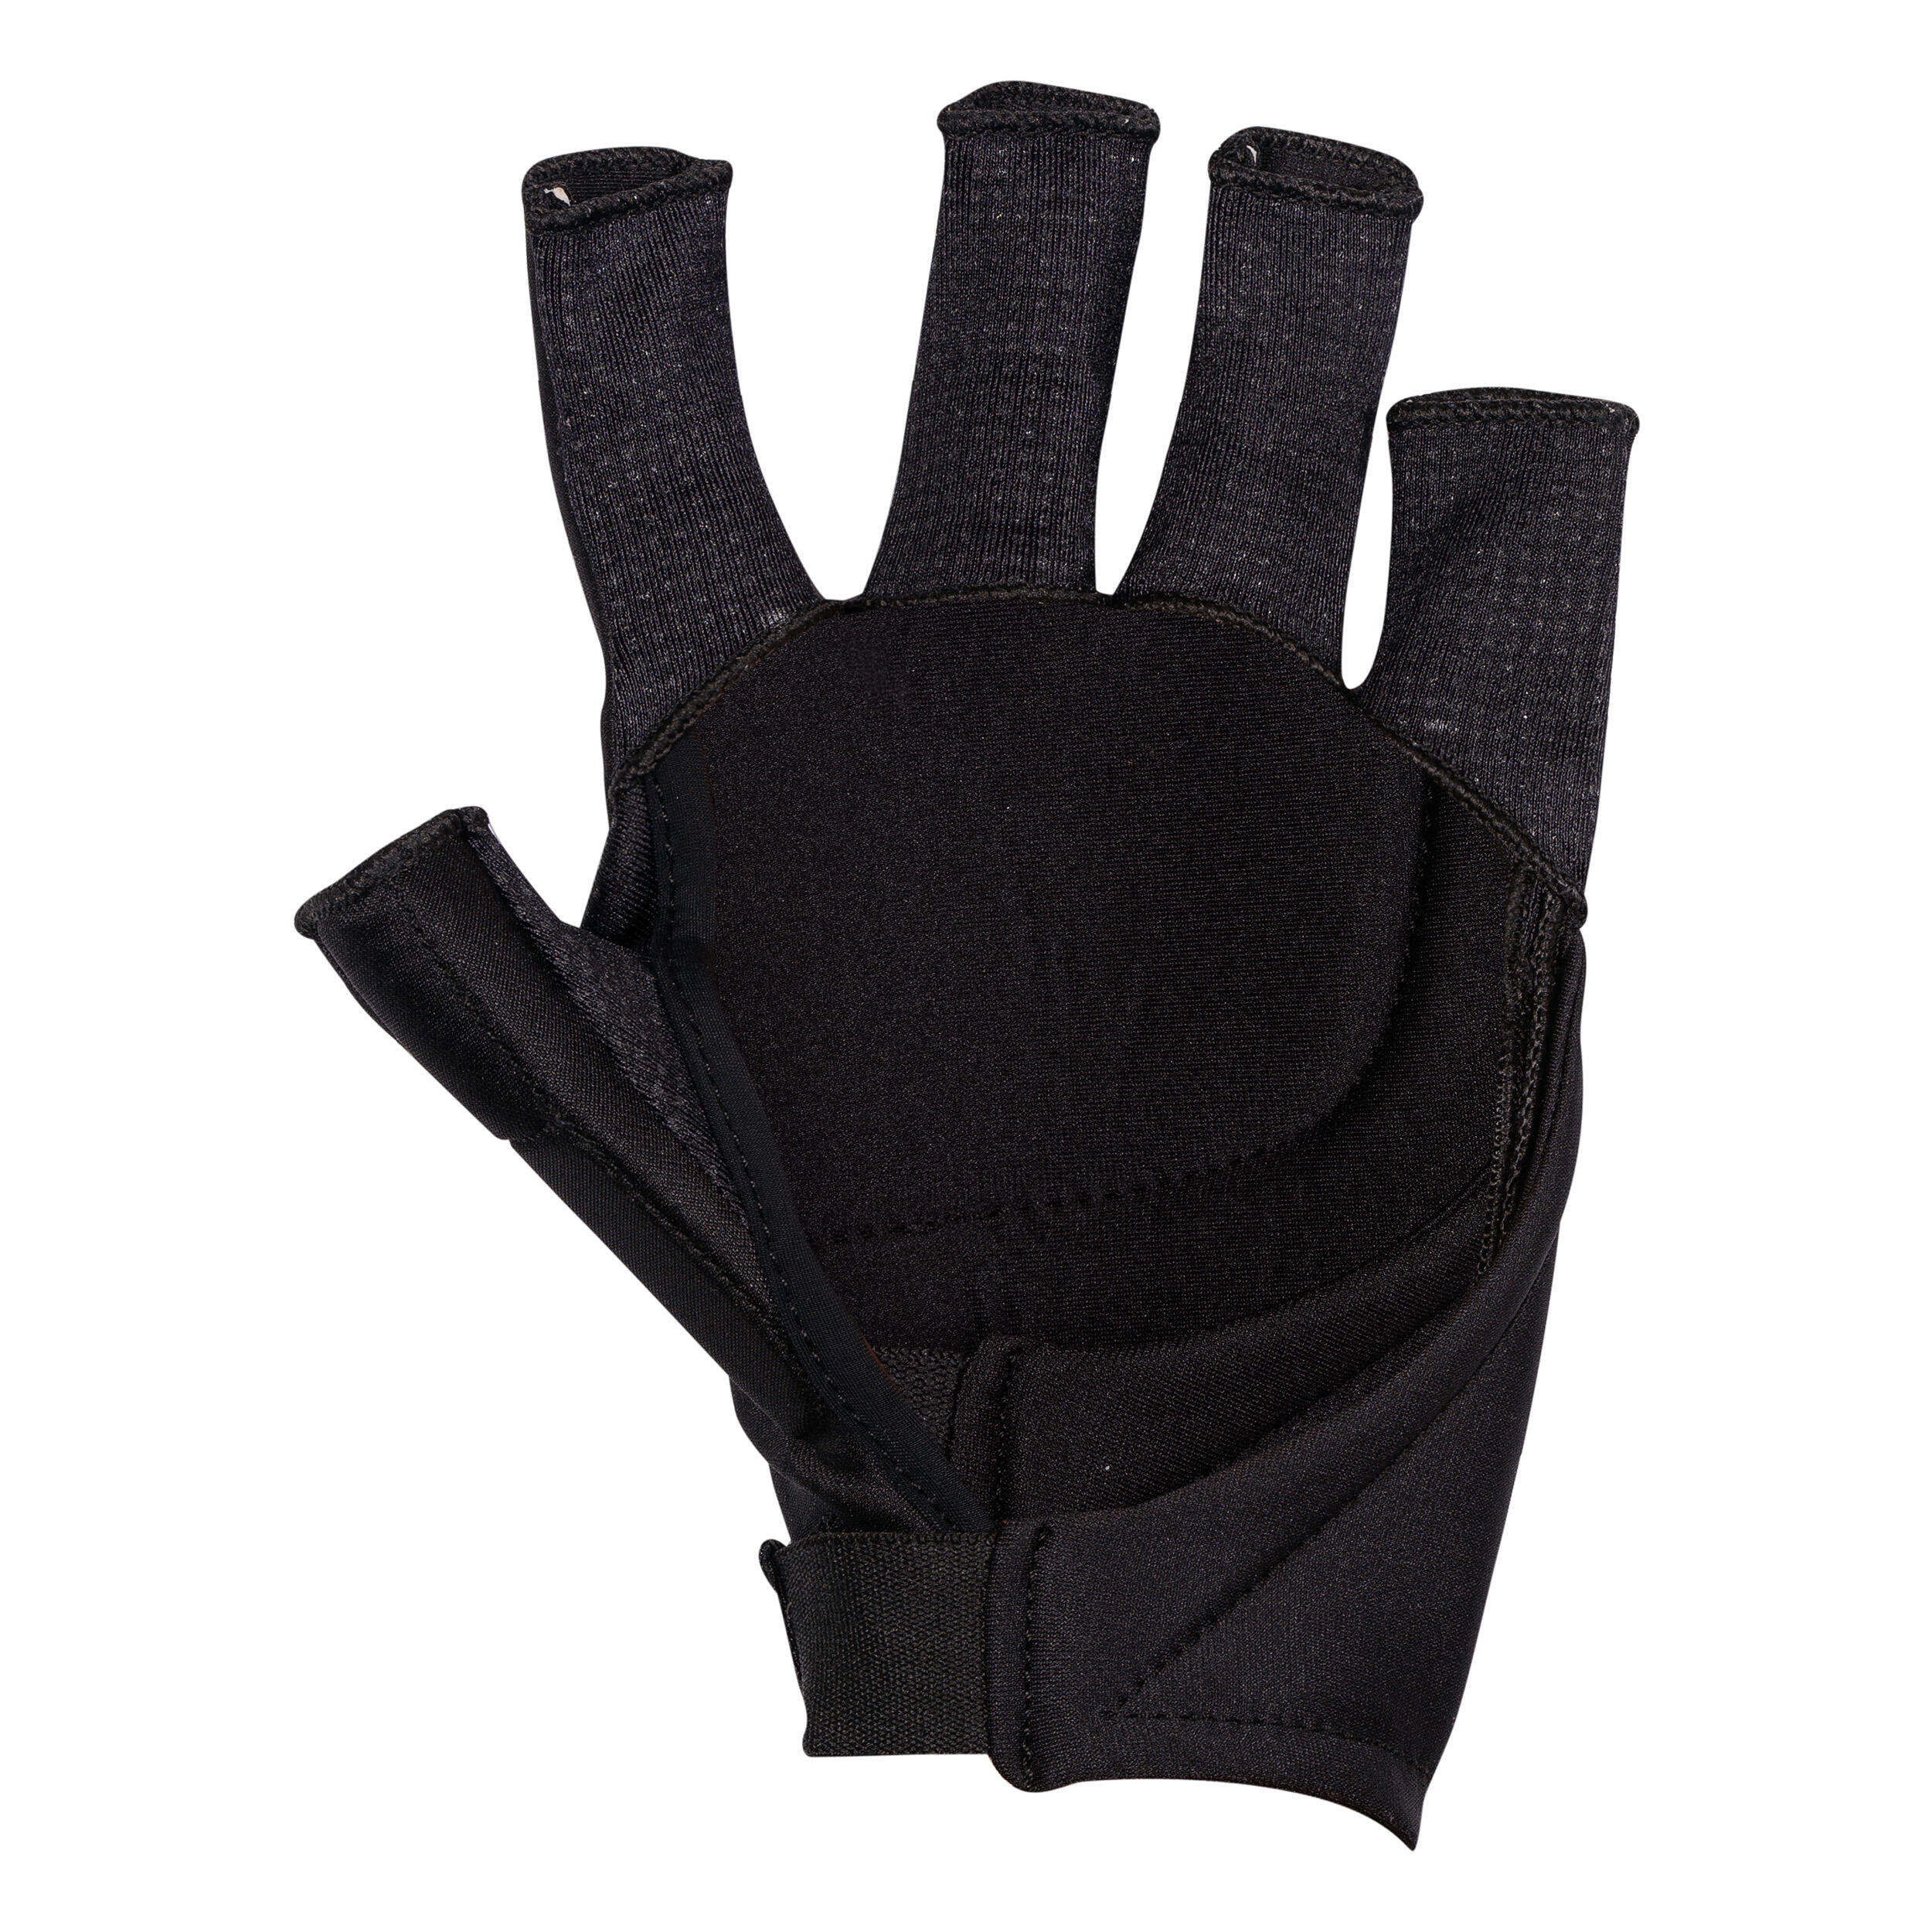 Kids'/Adult Moderate-Intensity 2 Knuckle Hockey Gloves Xlite Pro - Black 2/2